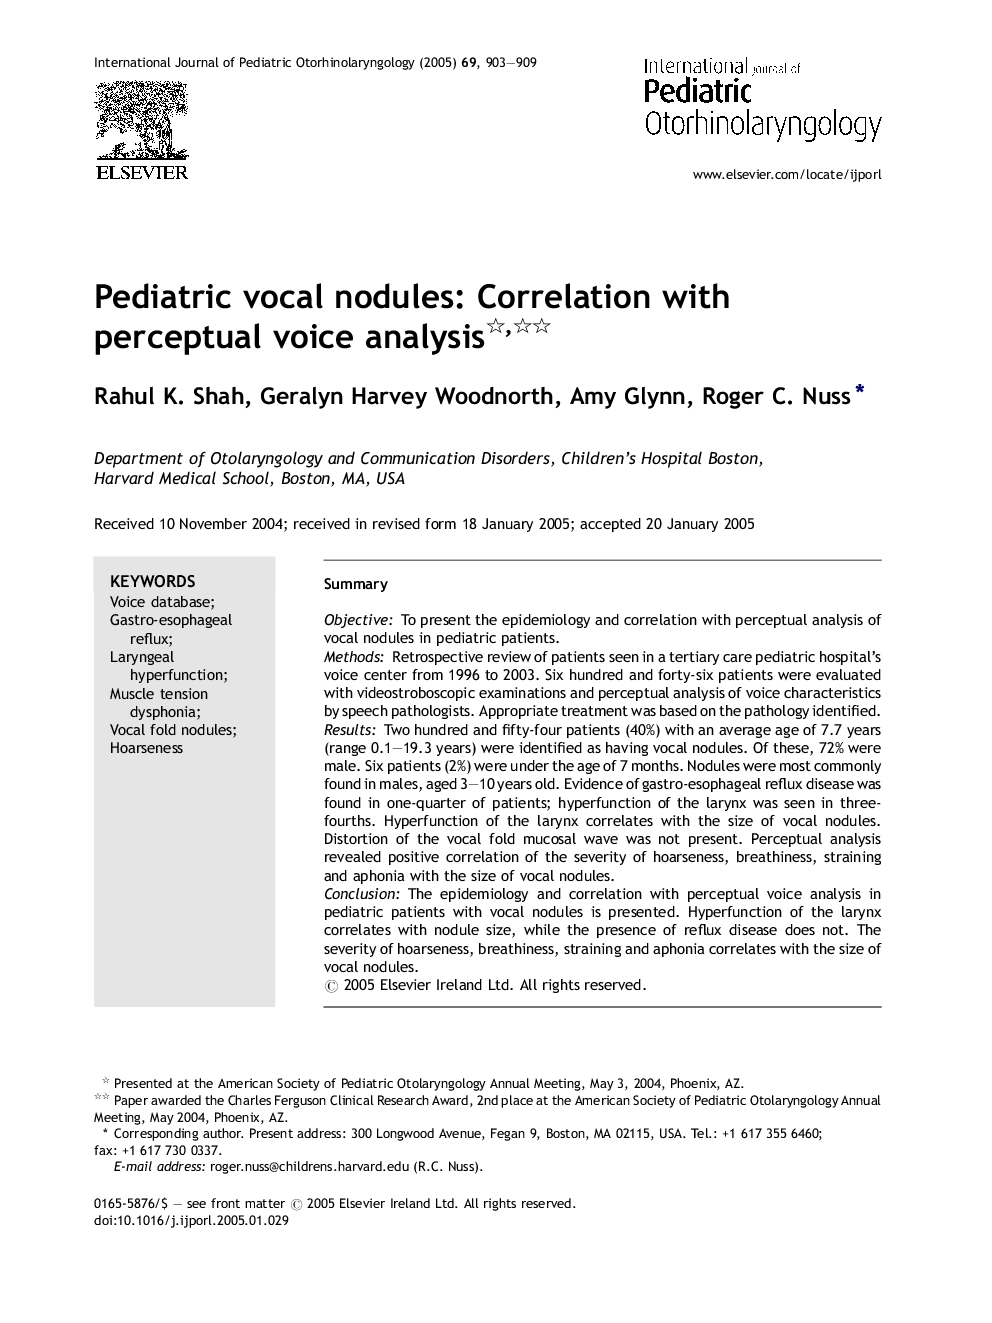 Pediatric vocal nodules: Correlation with perceptual voice analysis